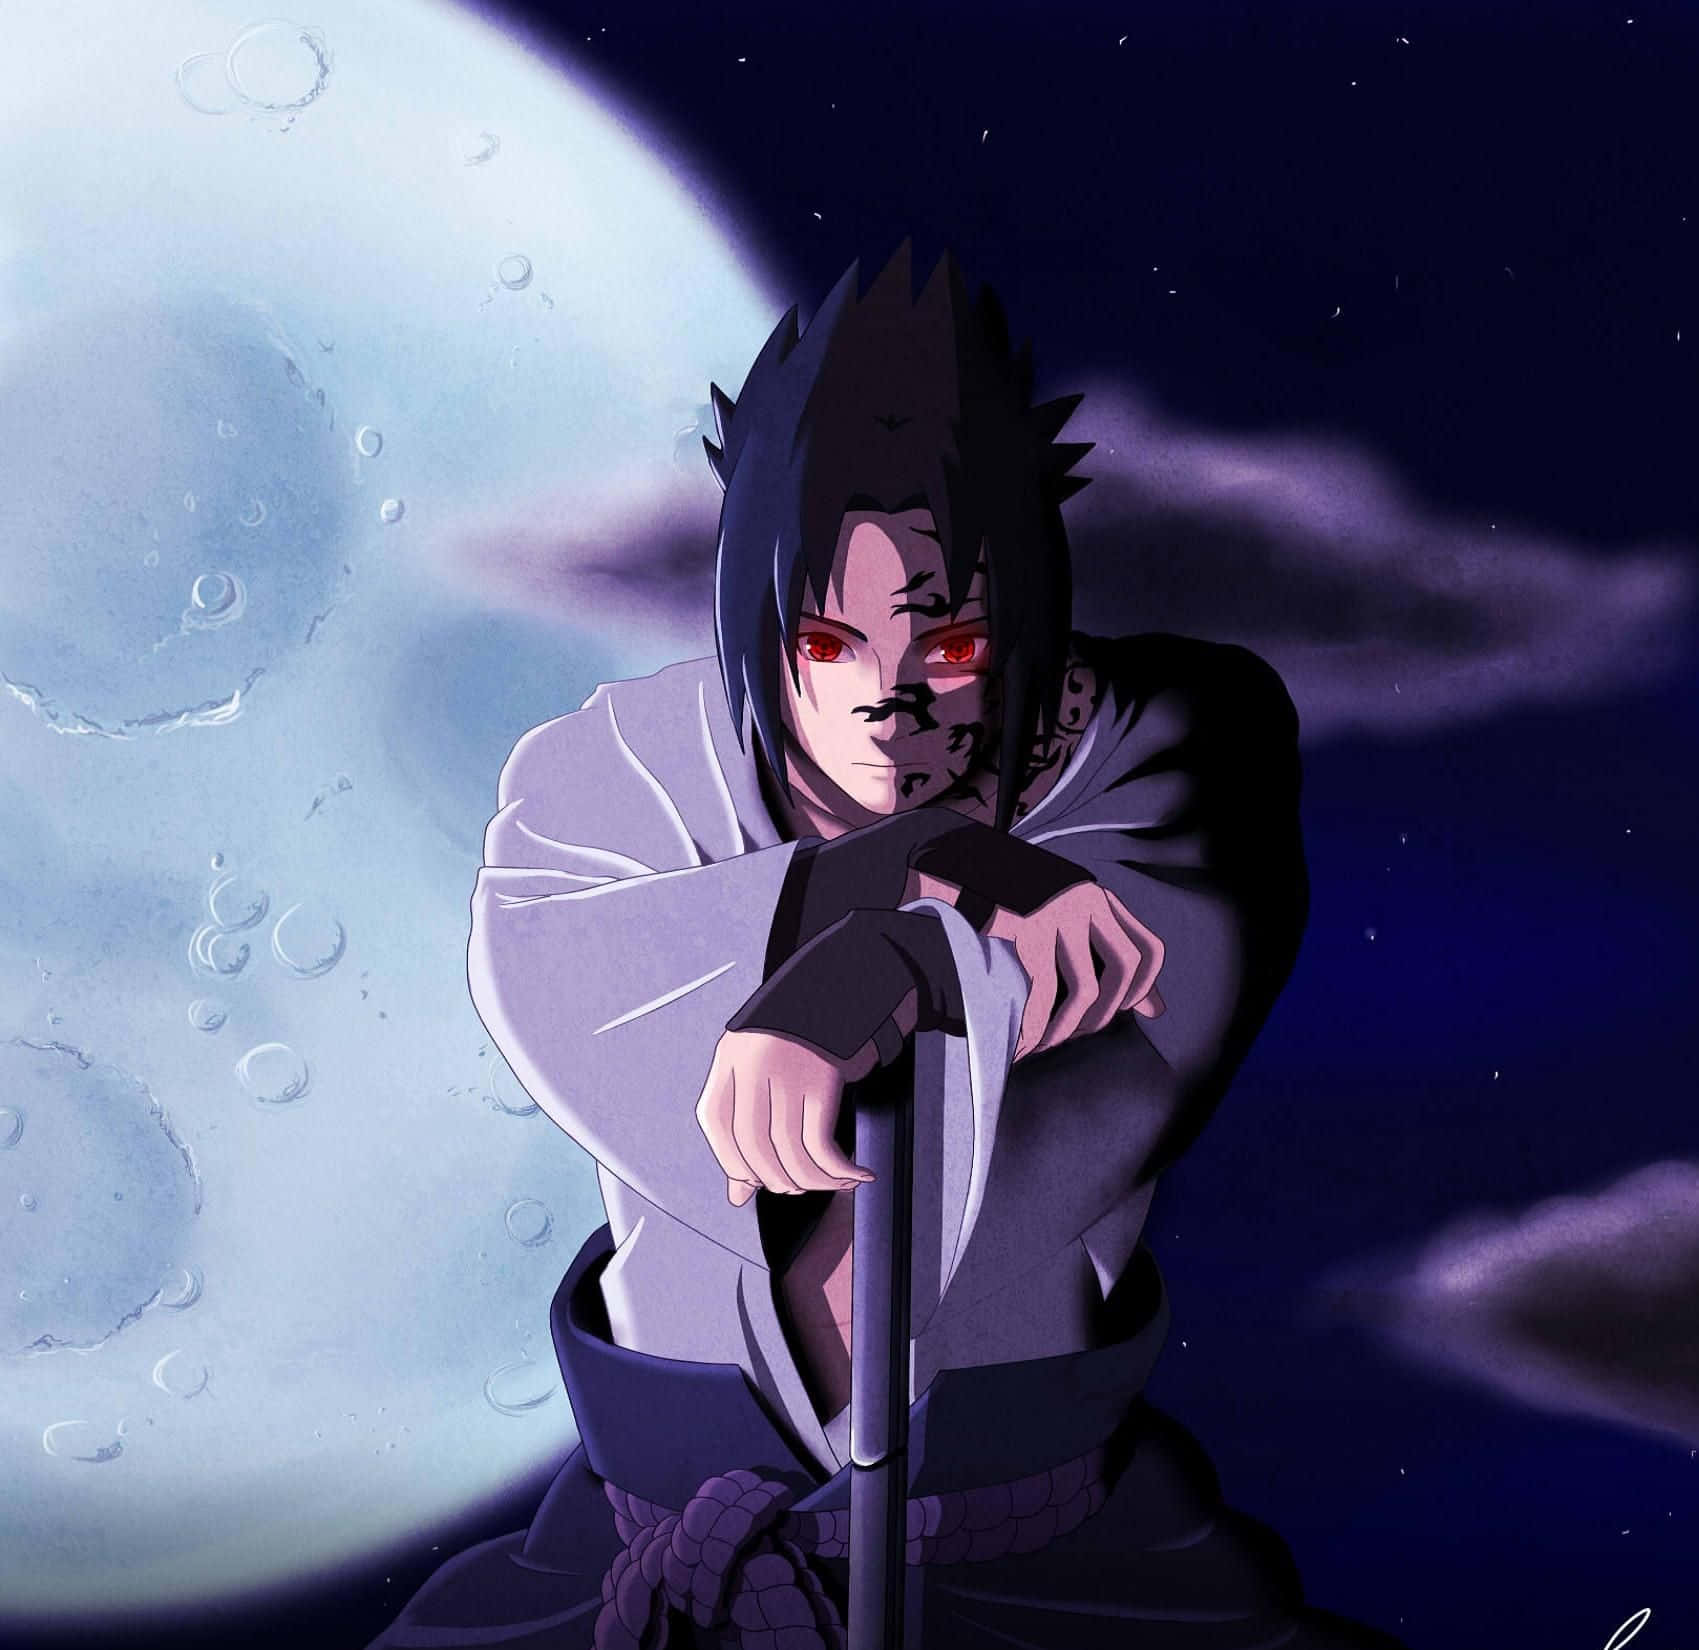 “The iconic Blue Sasuke is finally here!” Wallpaper